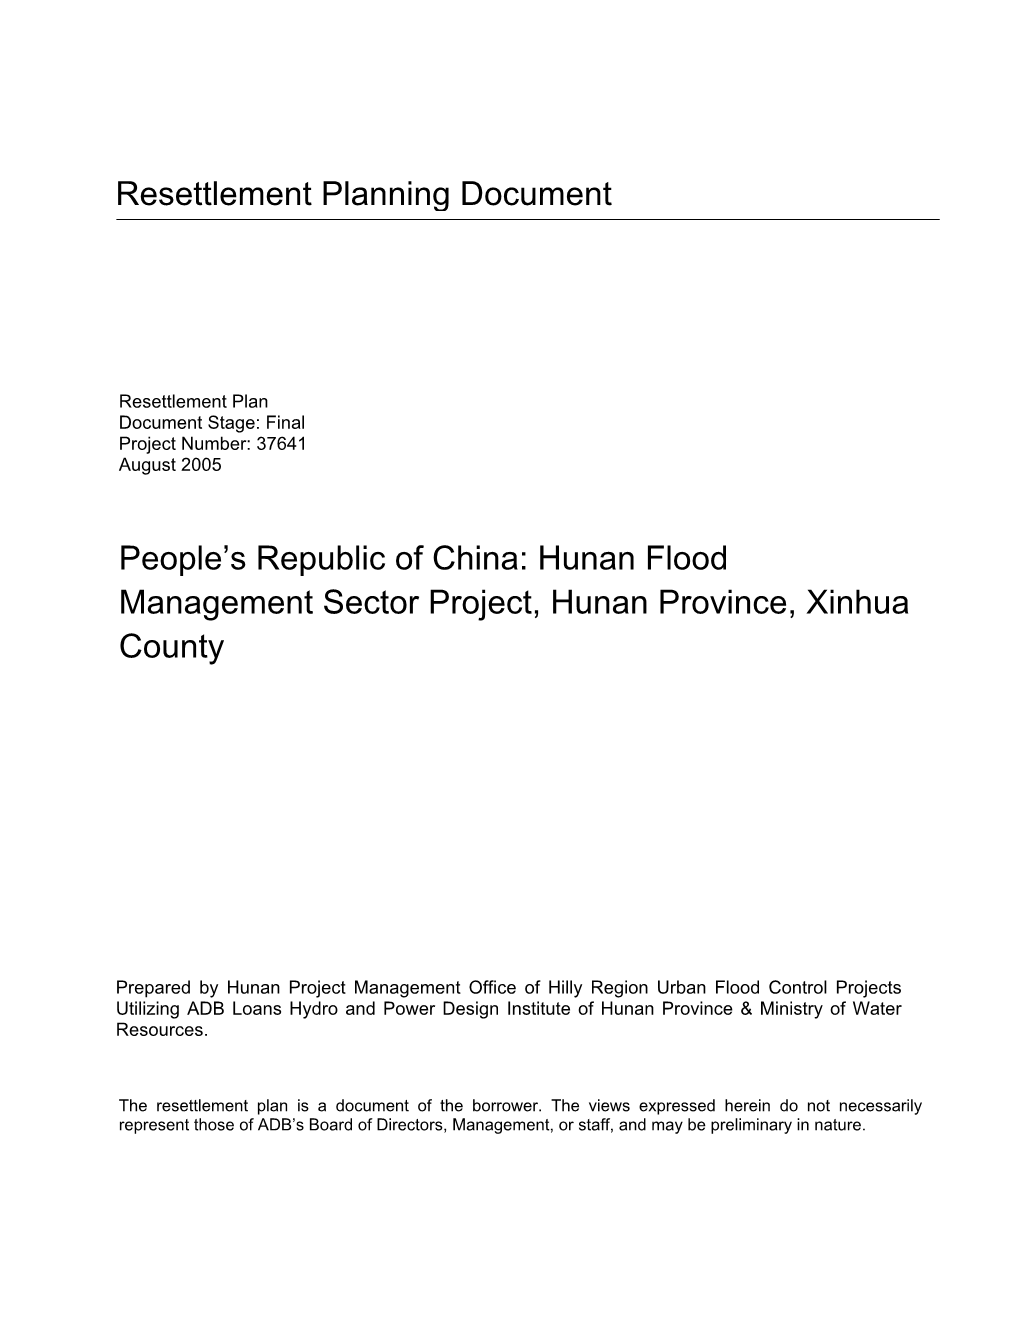 Hunan Flood Management Sector Project, Hunan Province, Xinhua County